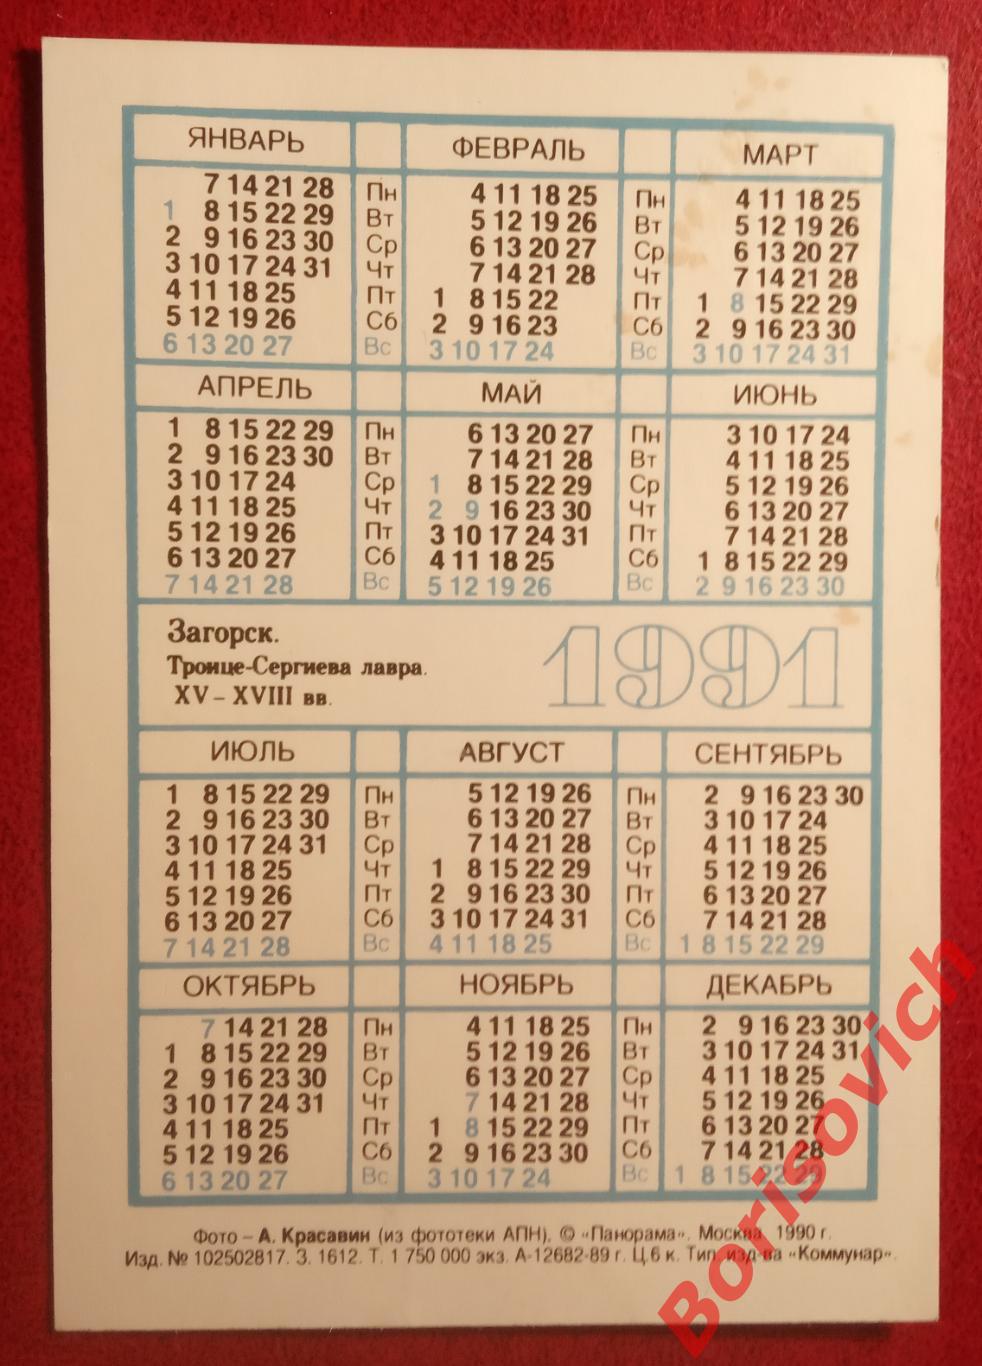 Календарик ЗАГОРСК ТРОИЦЕ-СЕРГИЕВА ЛАВРА XV-XVIII вв 1